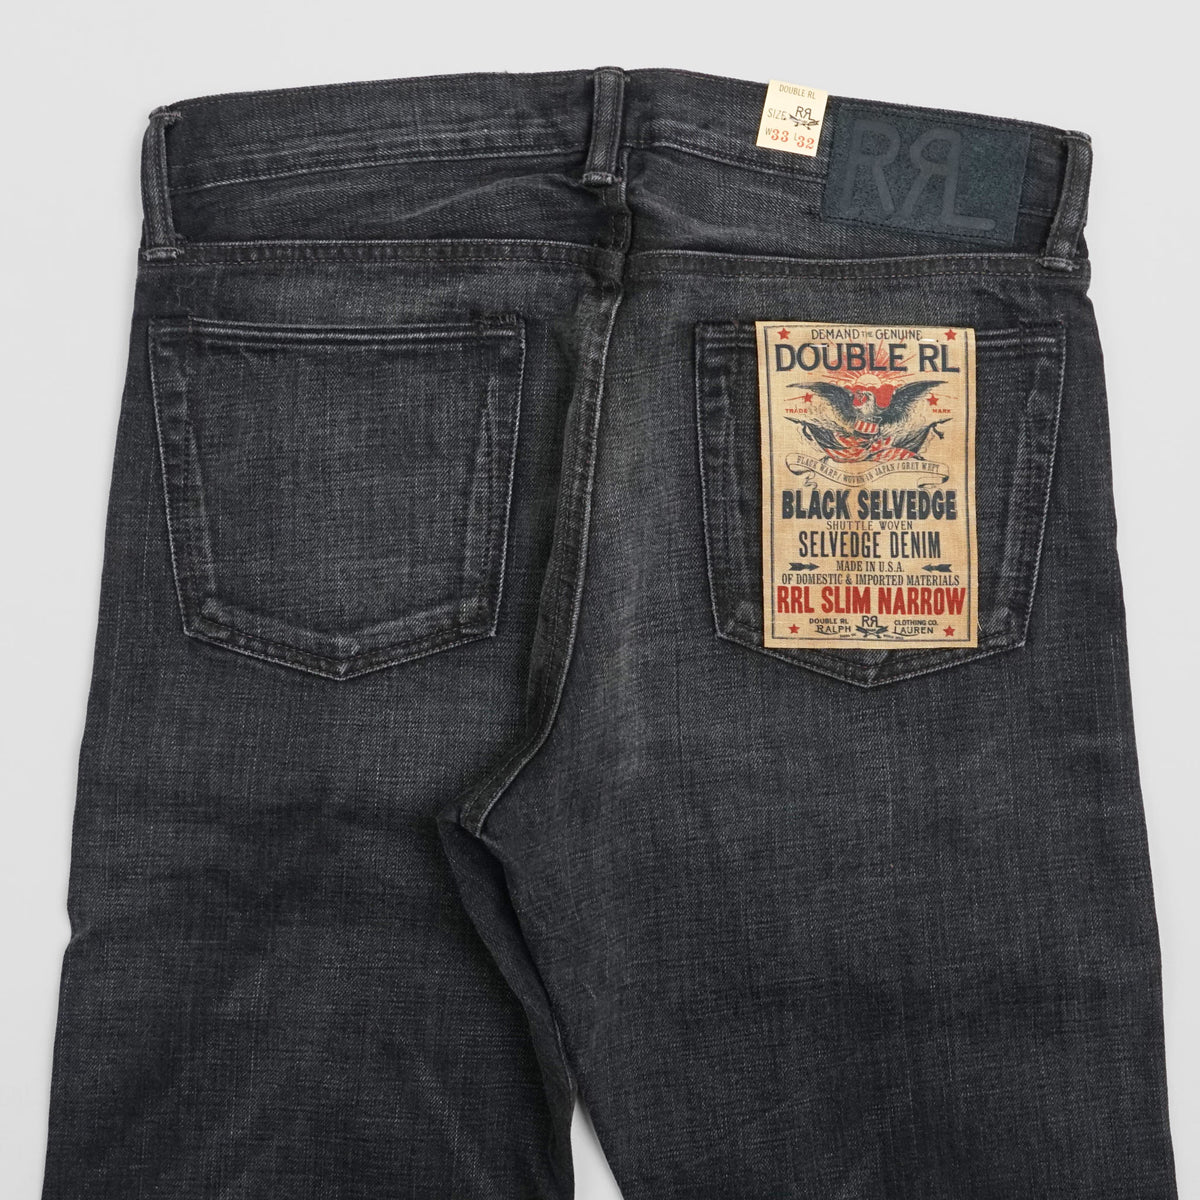 Double RL Selvage Denim Jeans Slim Narrow